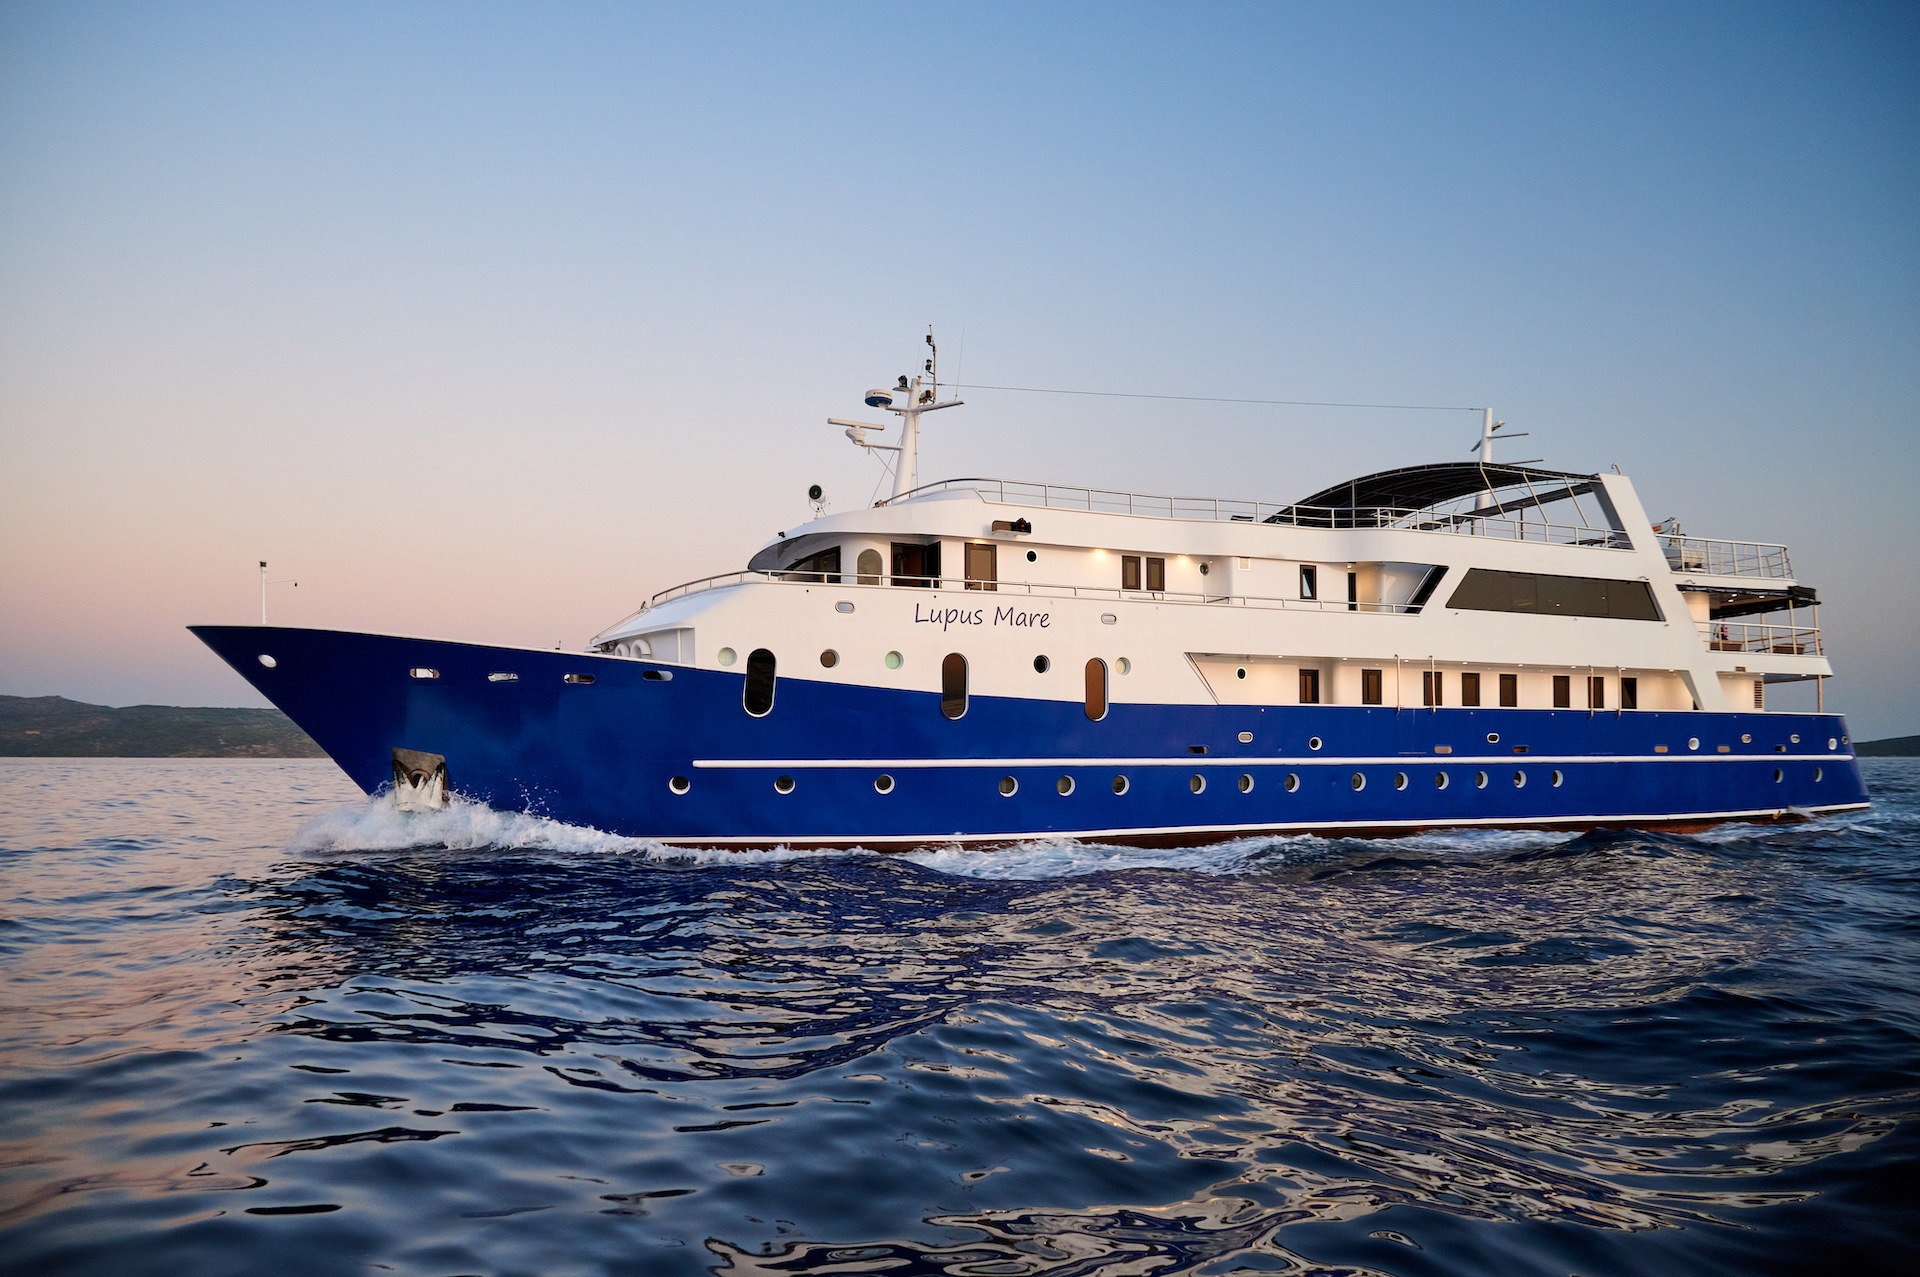 crewed Croatian yacht lupus mare